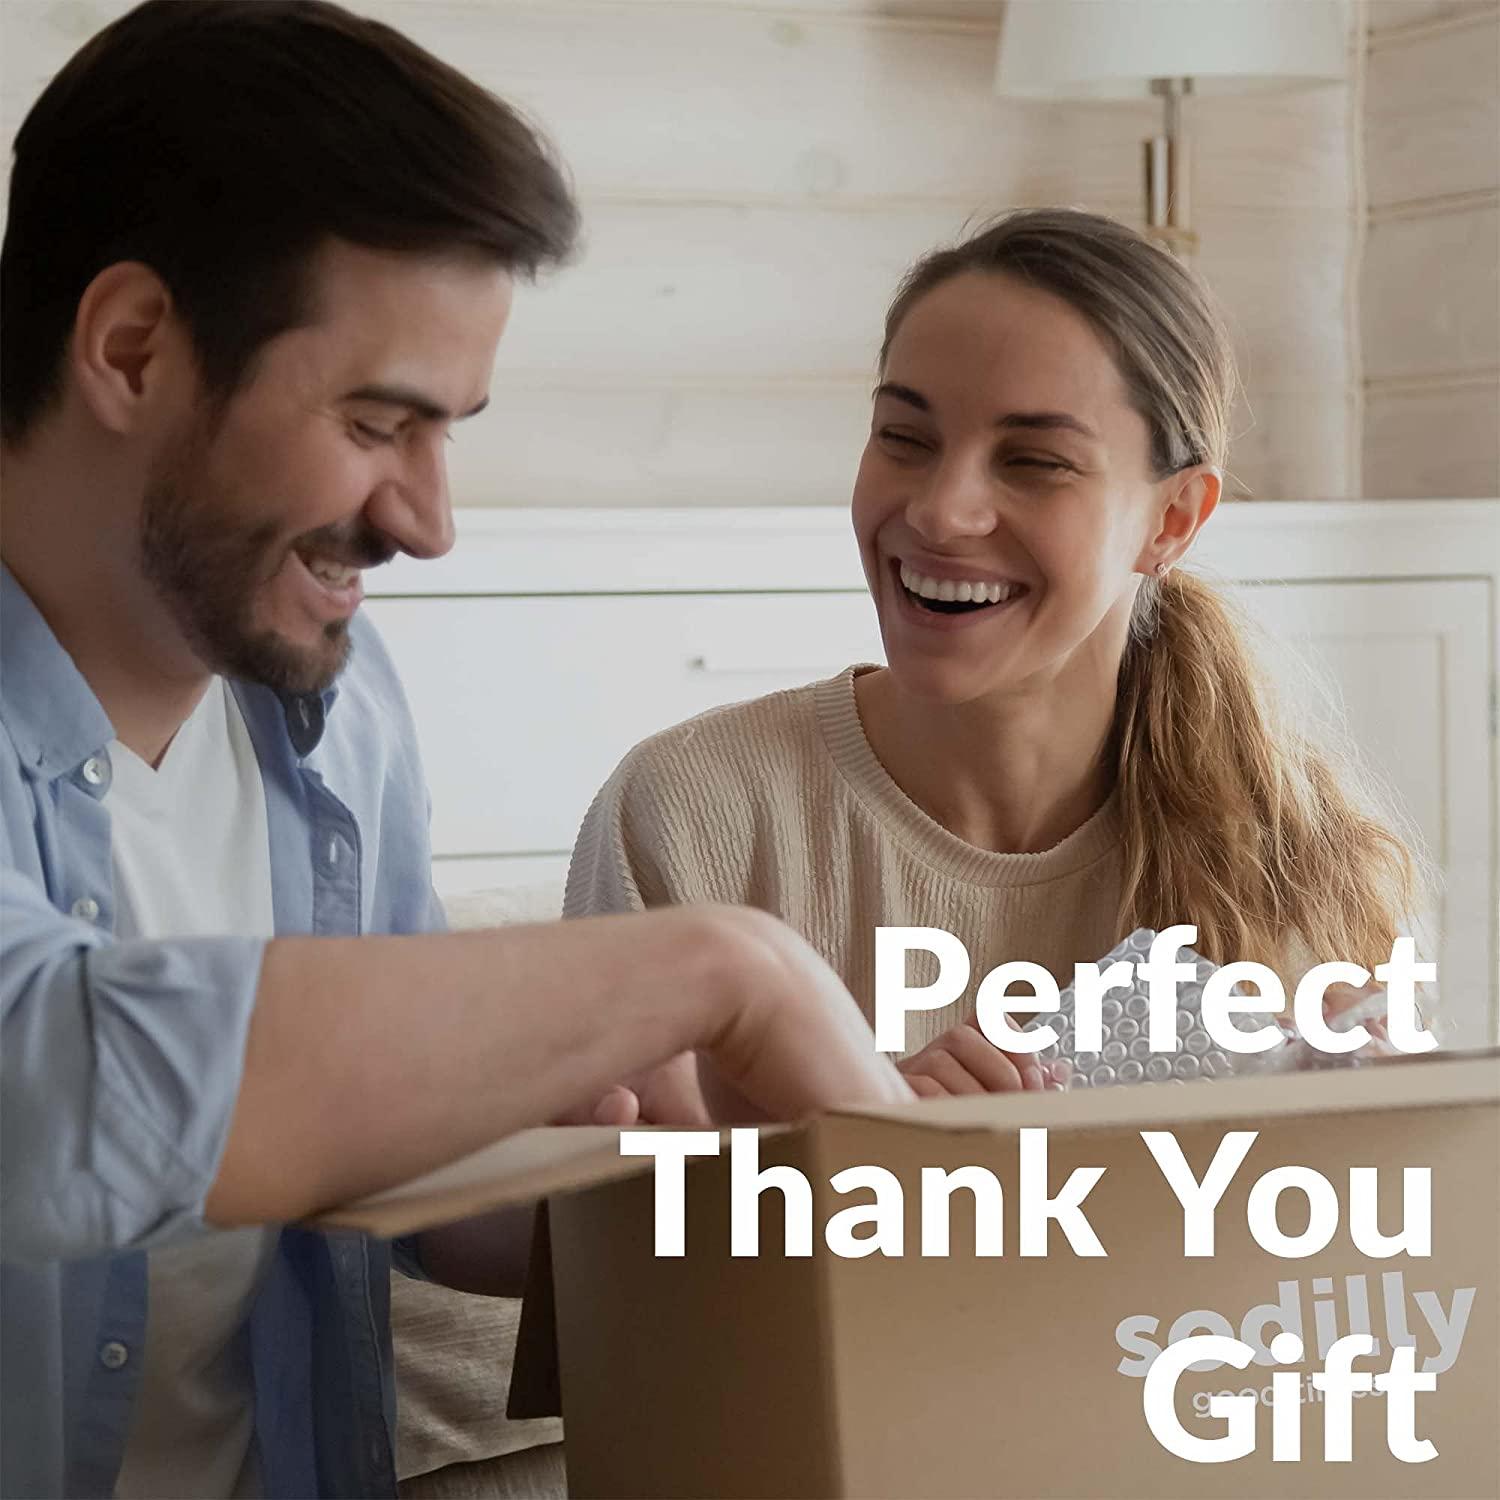  Sodilly Employee Appreciation Gift Box - Thank You